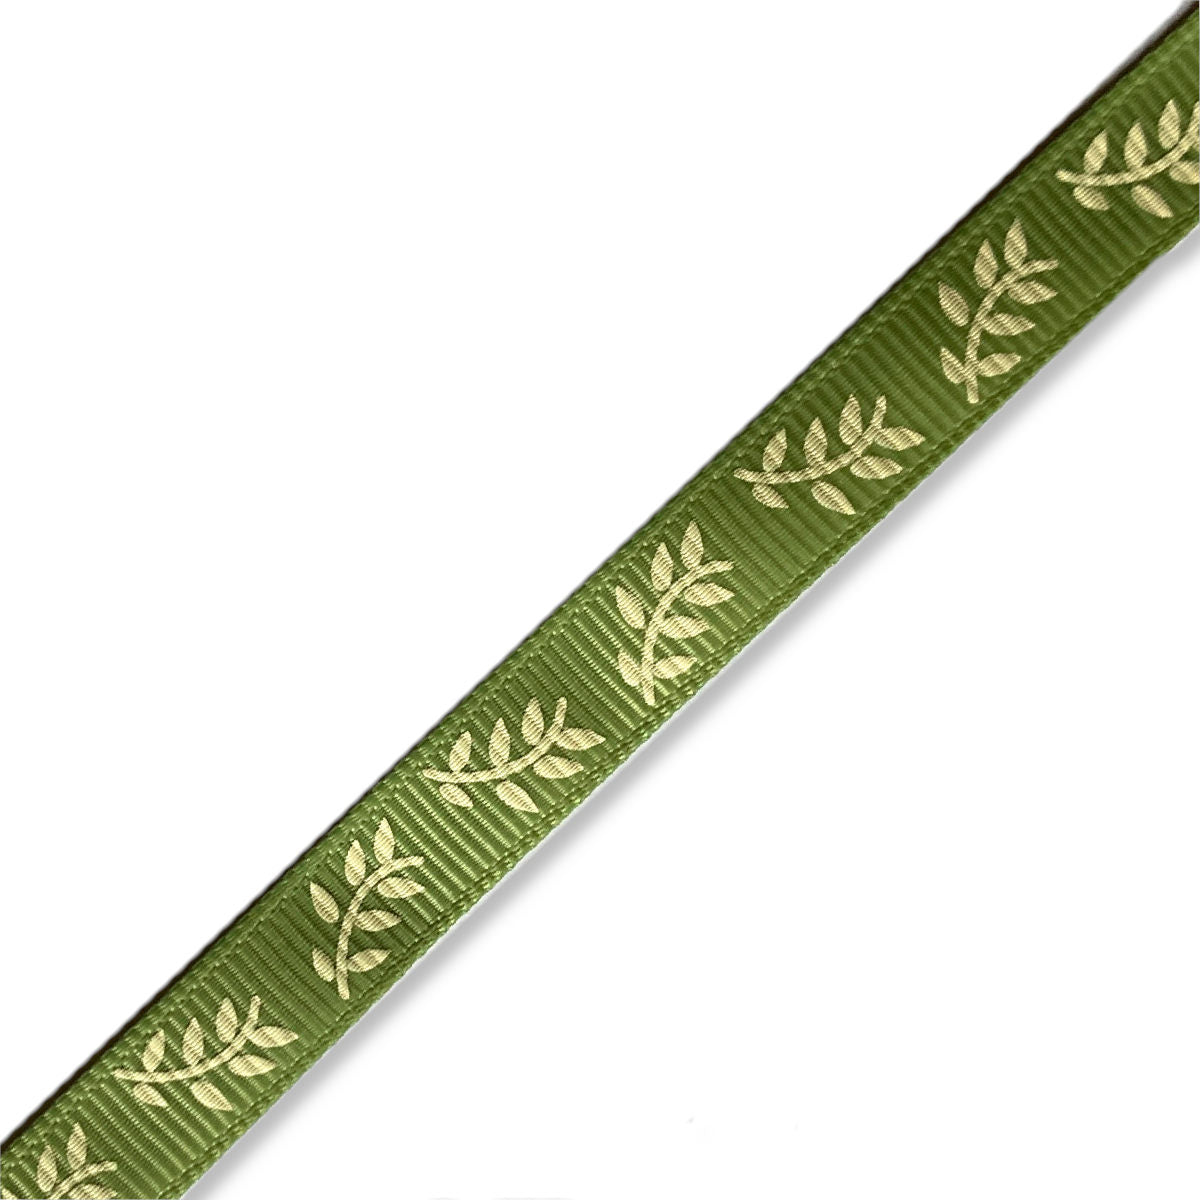 9mm grosgrain green ribbon with ivory fern print